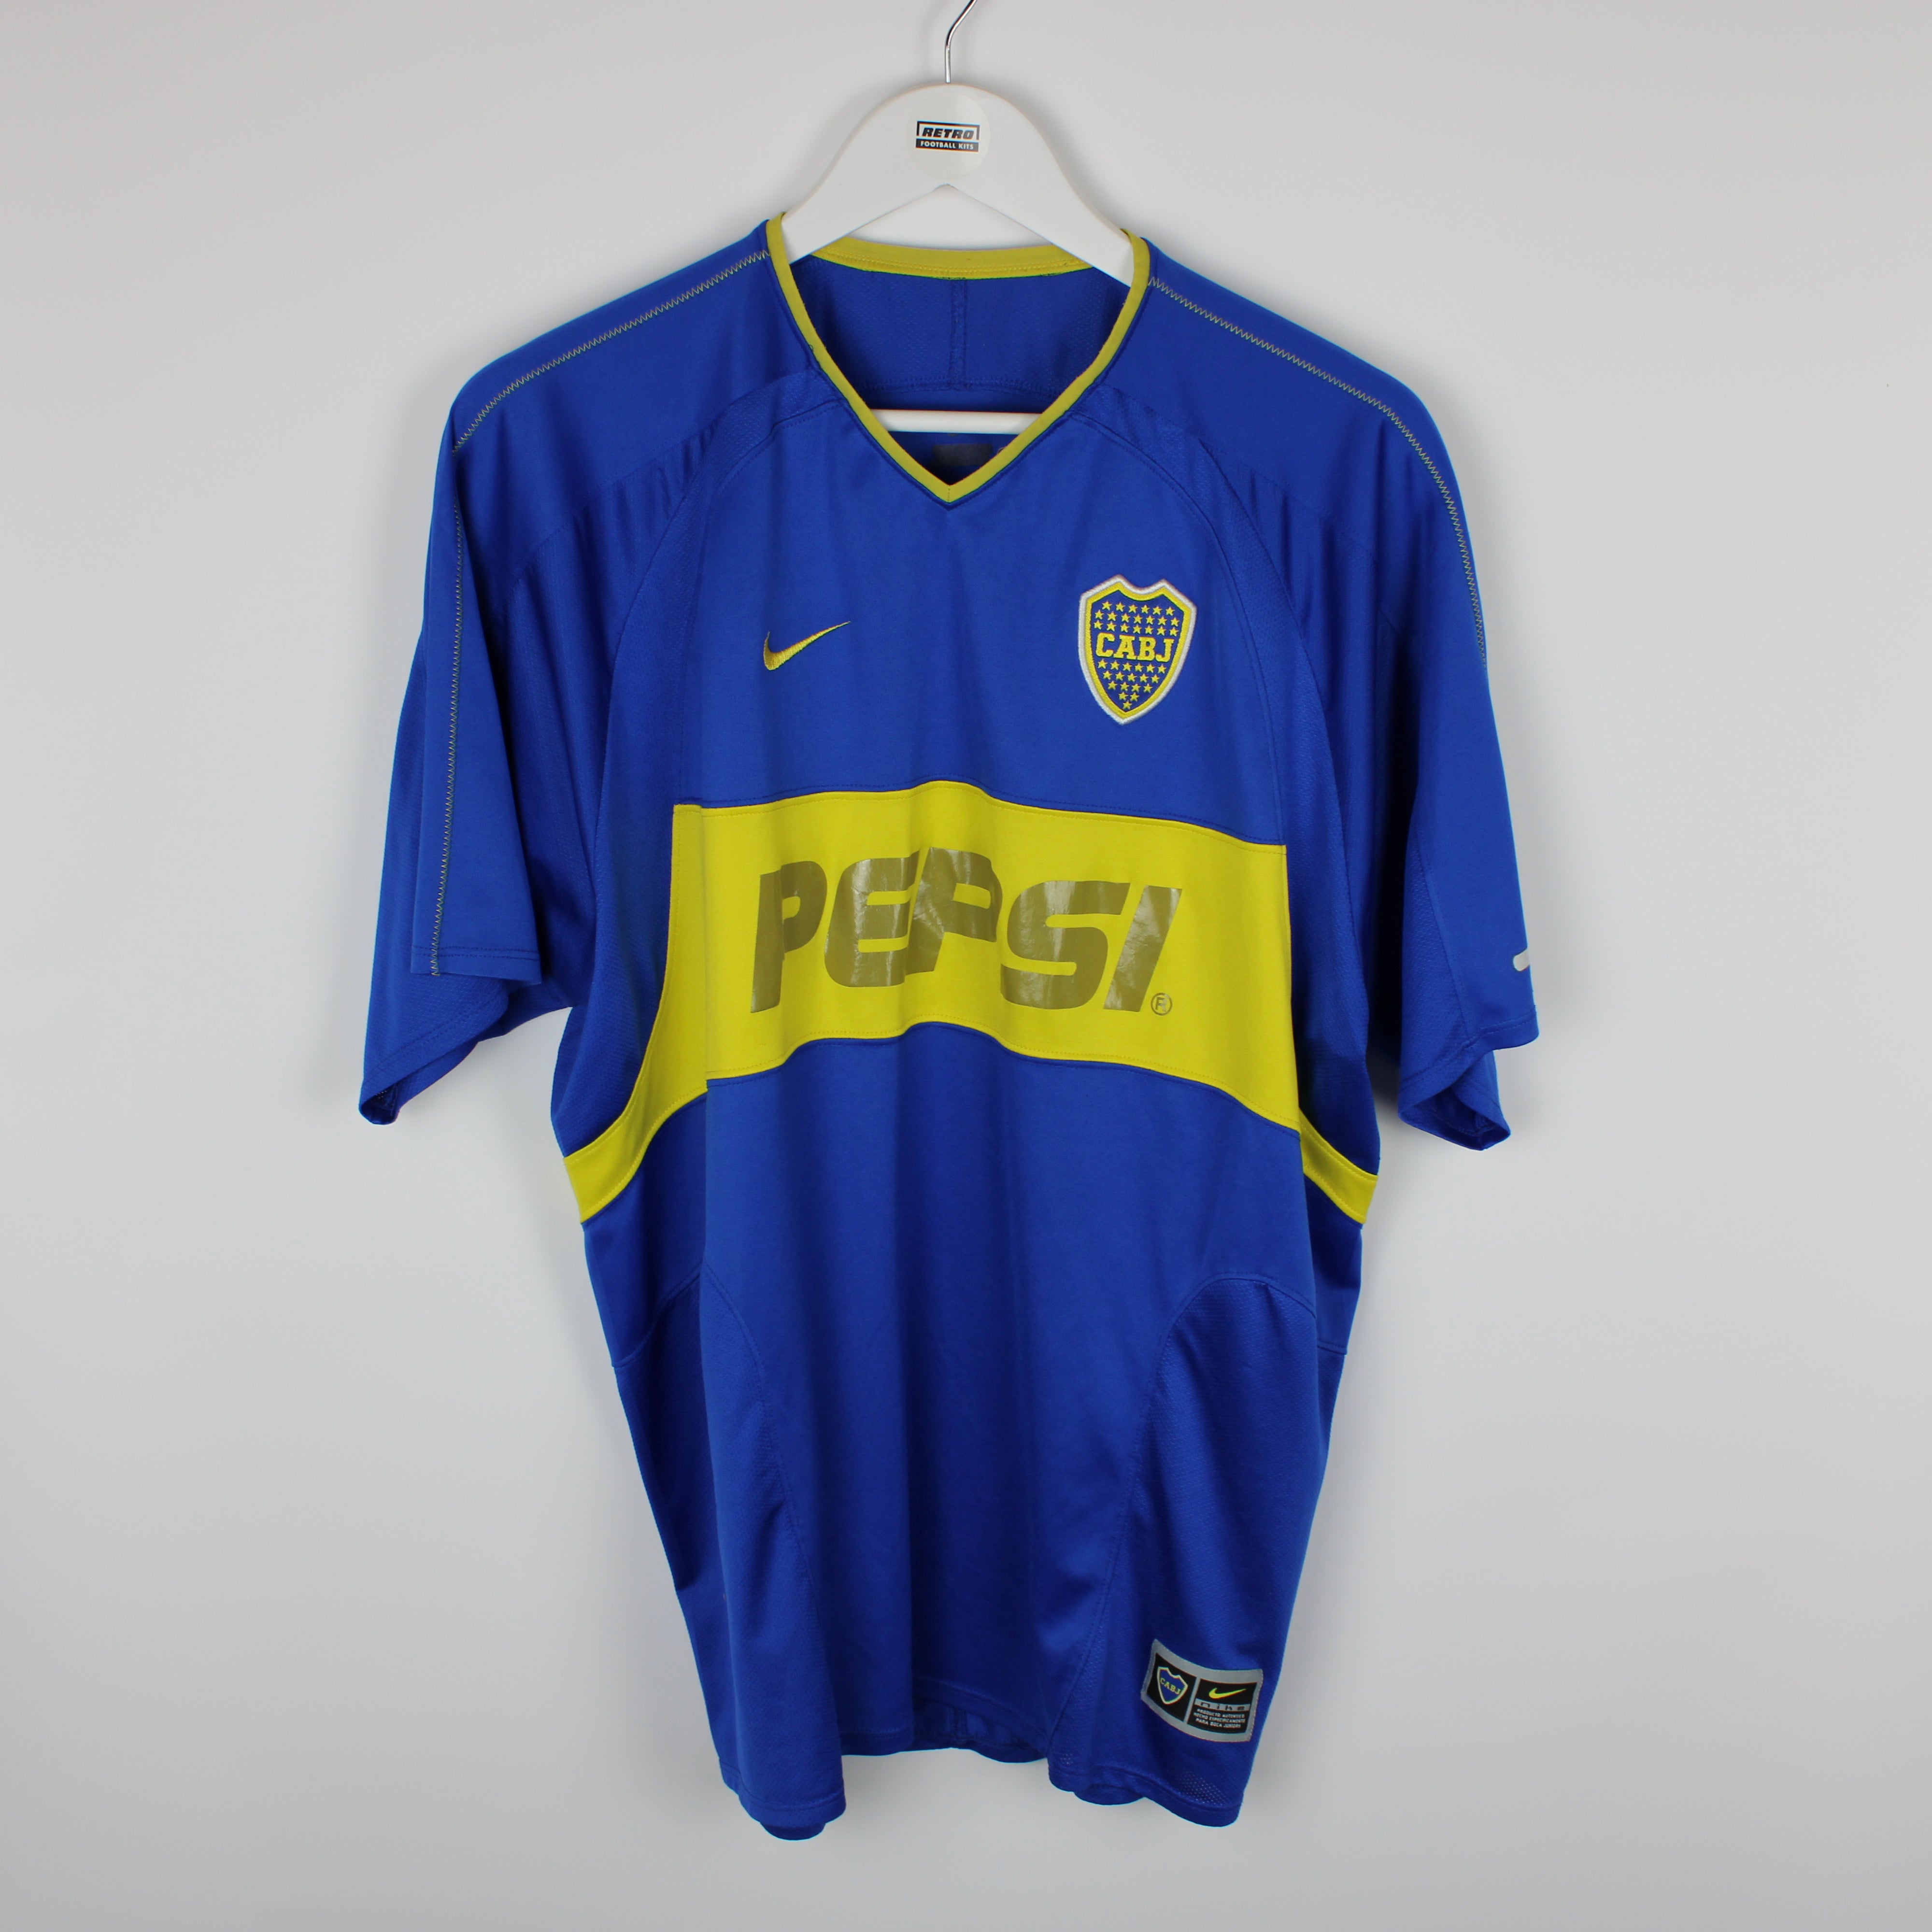 Classic Football Shirts on X: No More Nike The new Boca Juniors